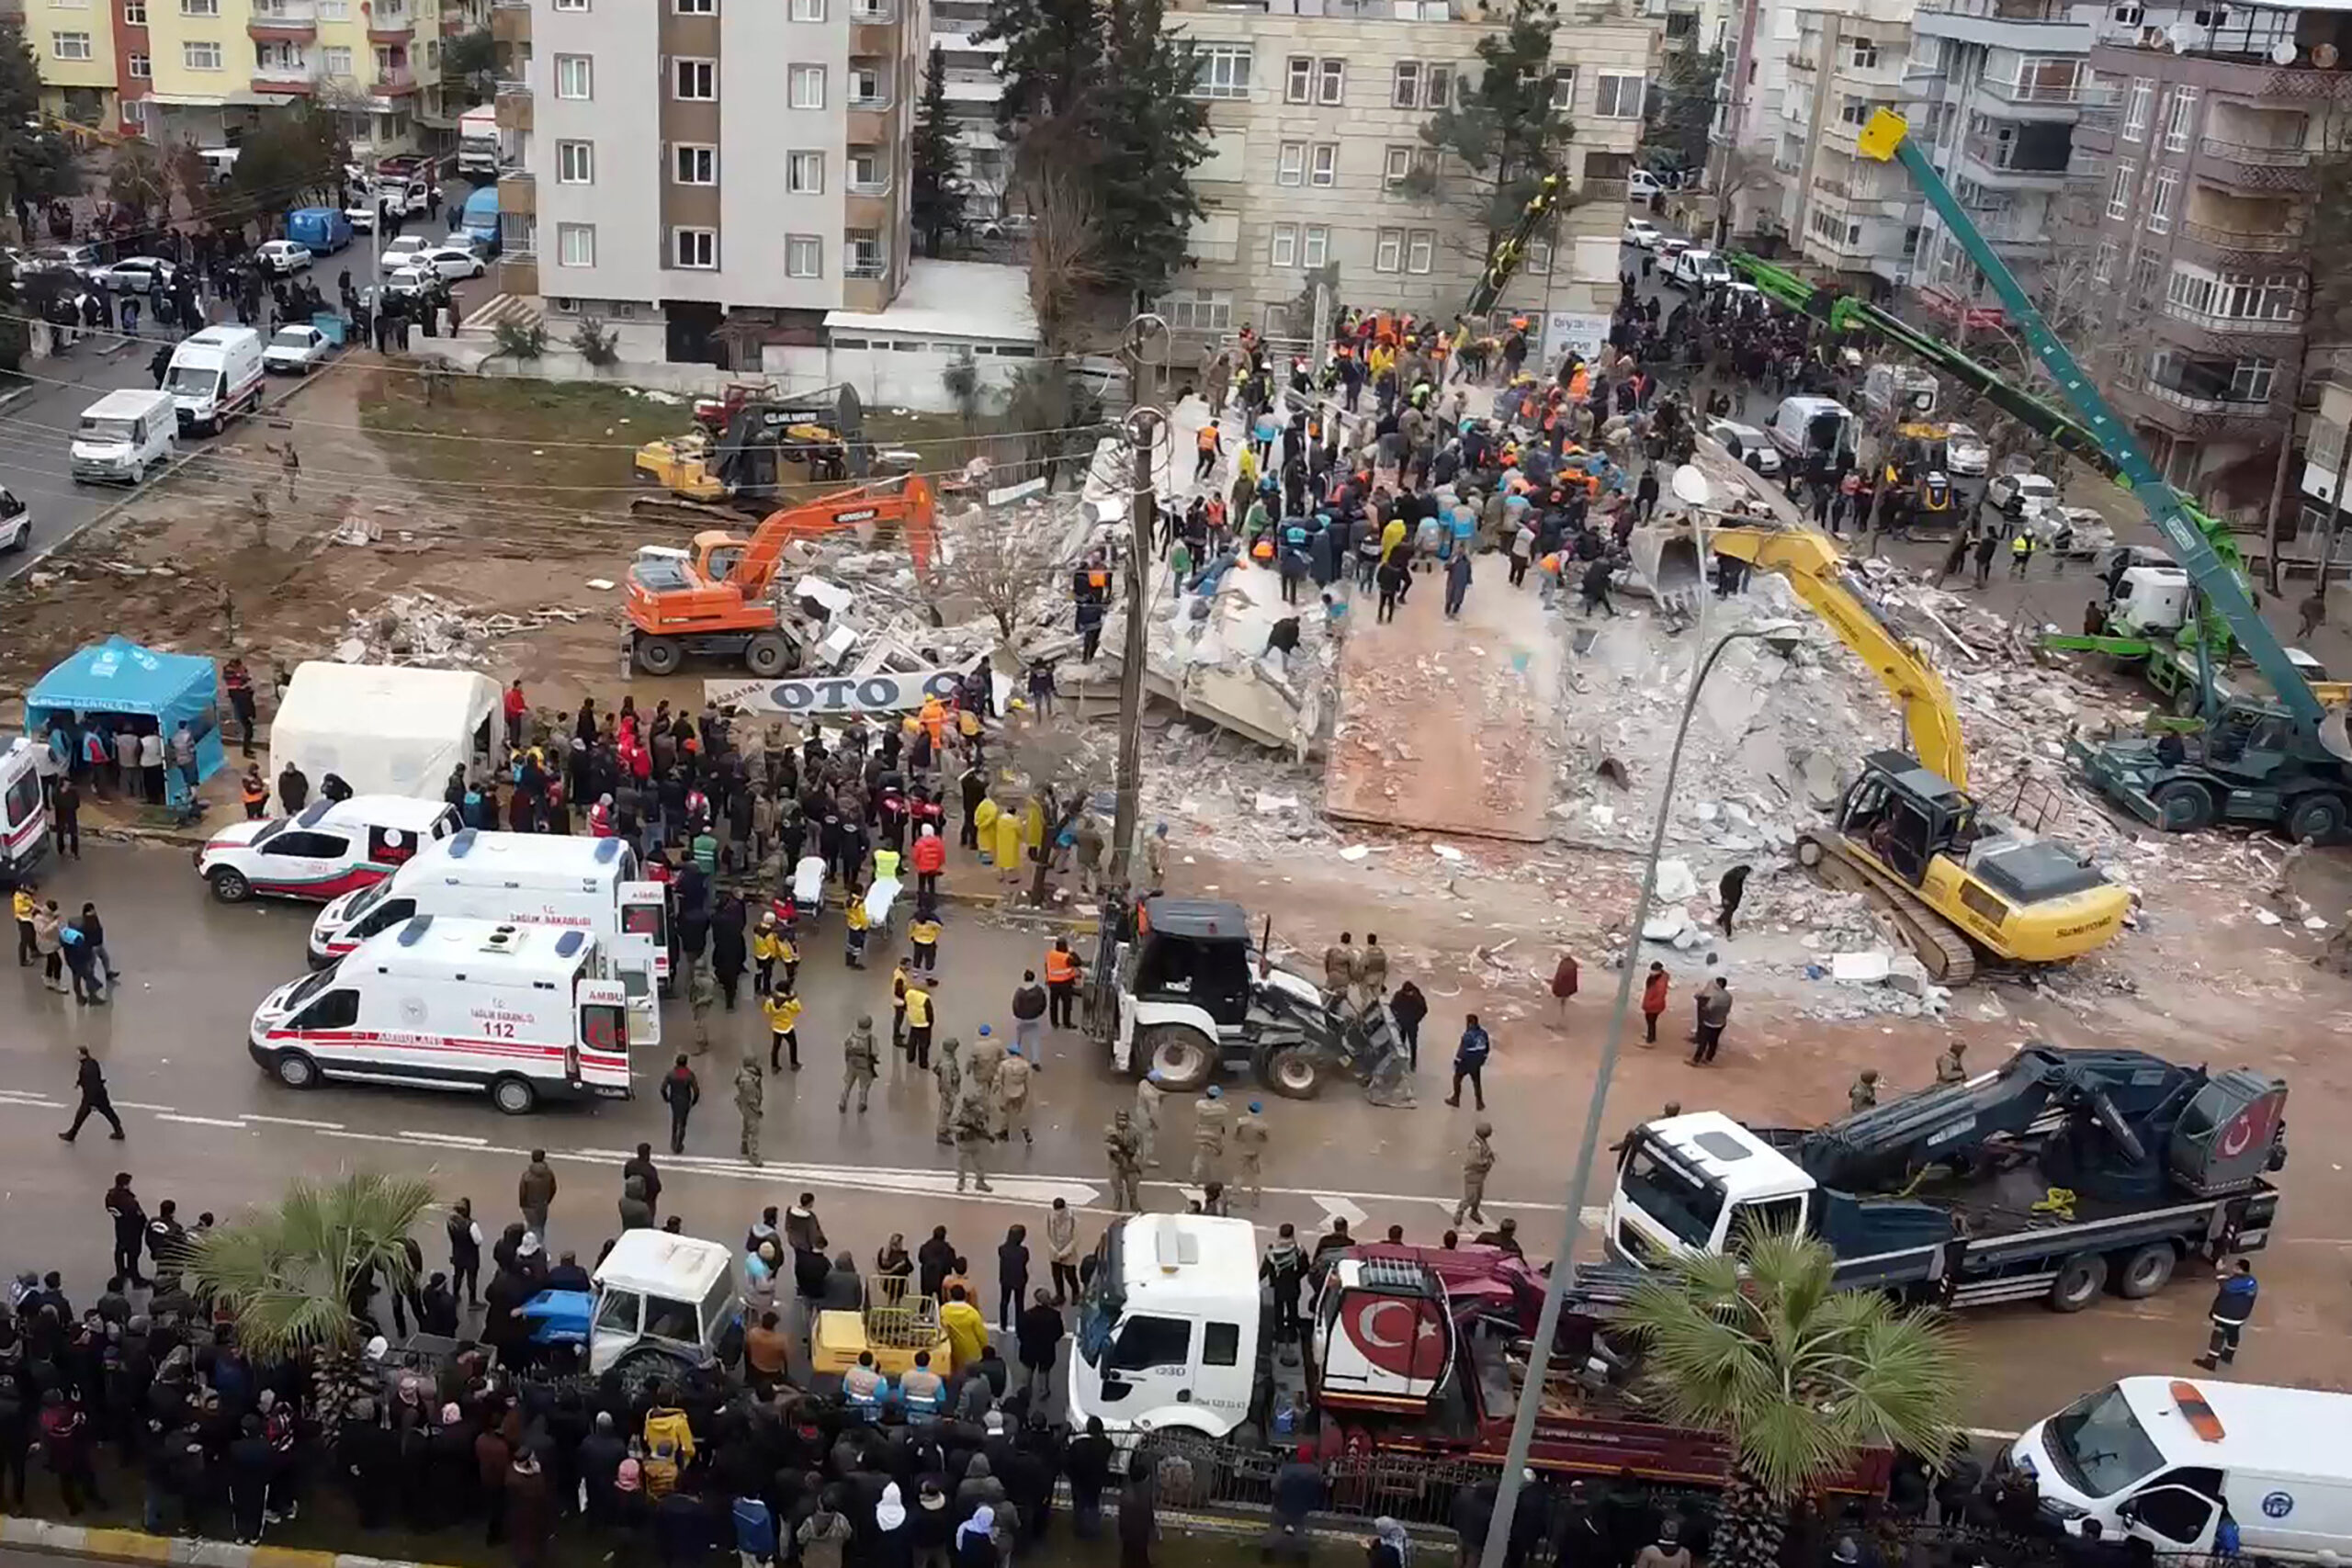 rescuers search for survivors through the rubble